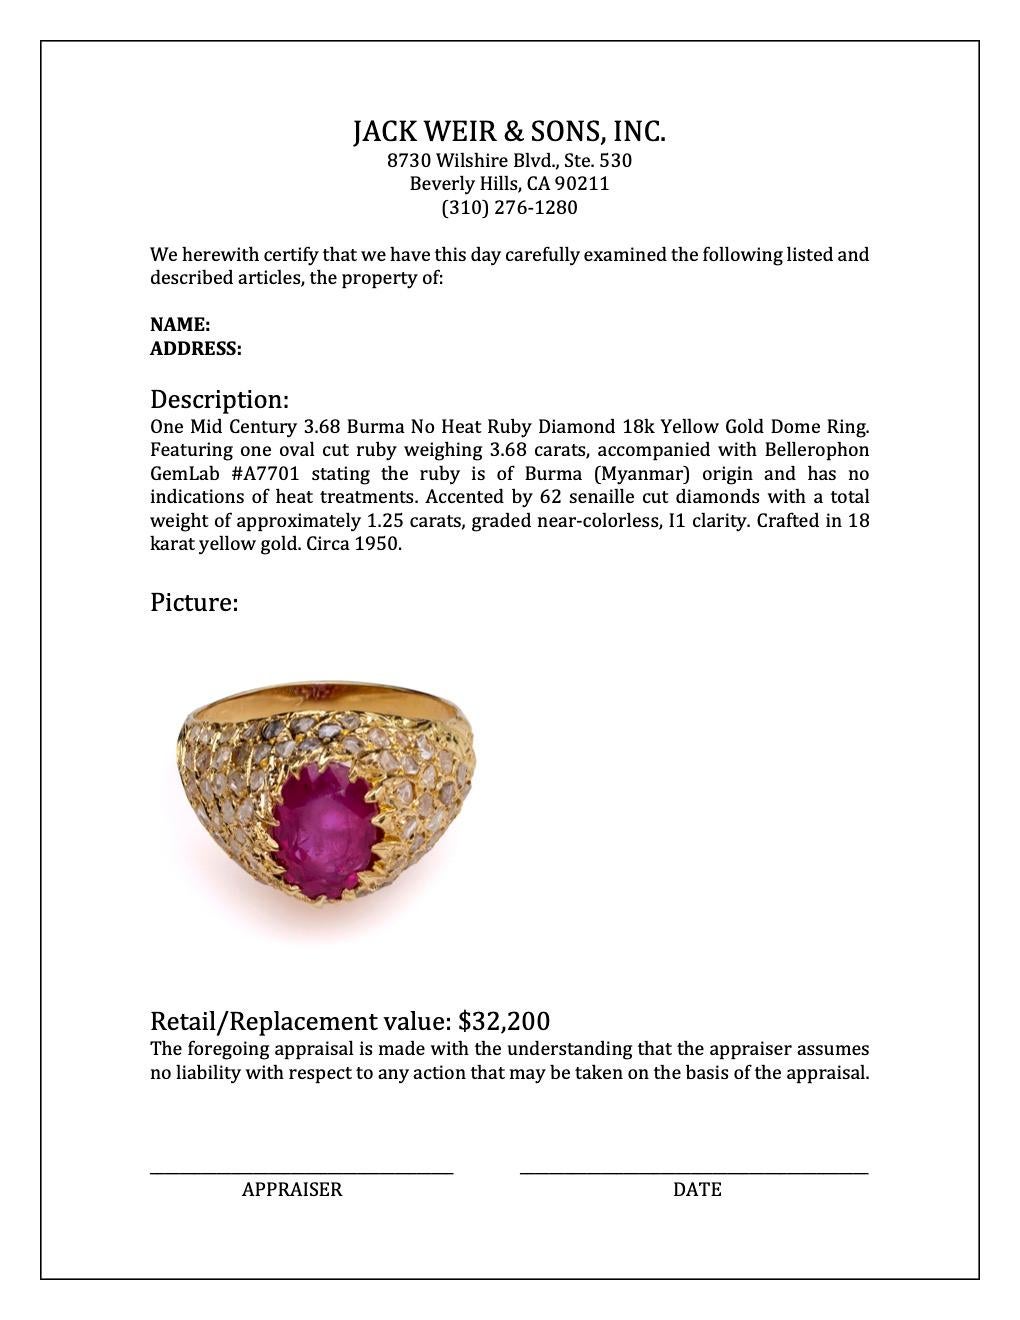 Mid Century 3.68 Burma No Heat Ruby Diamond 18k Yellow Gold Dome Ring For Sale 3